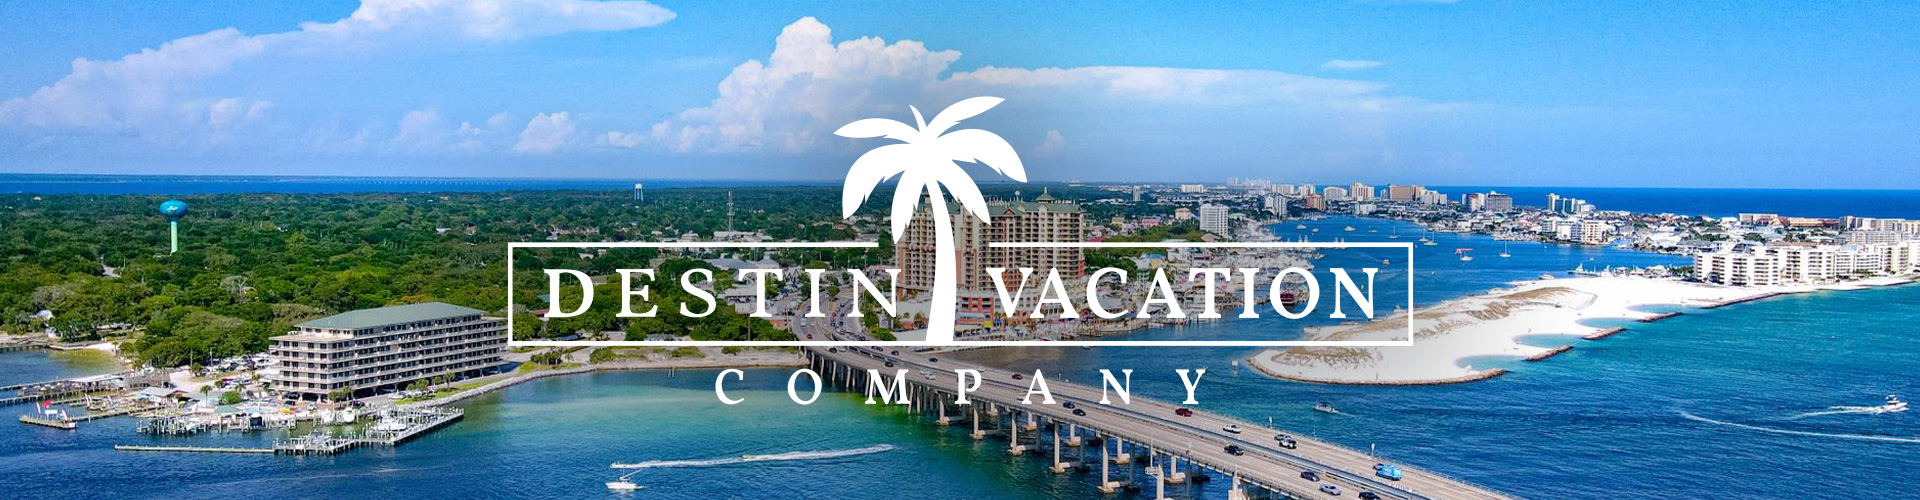 Destin Vacation Company Banner